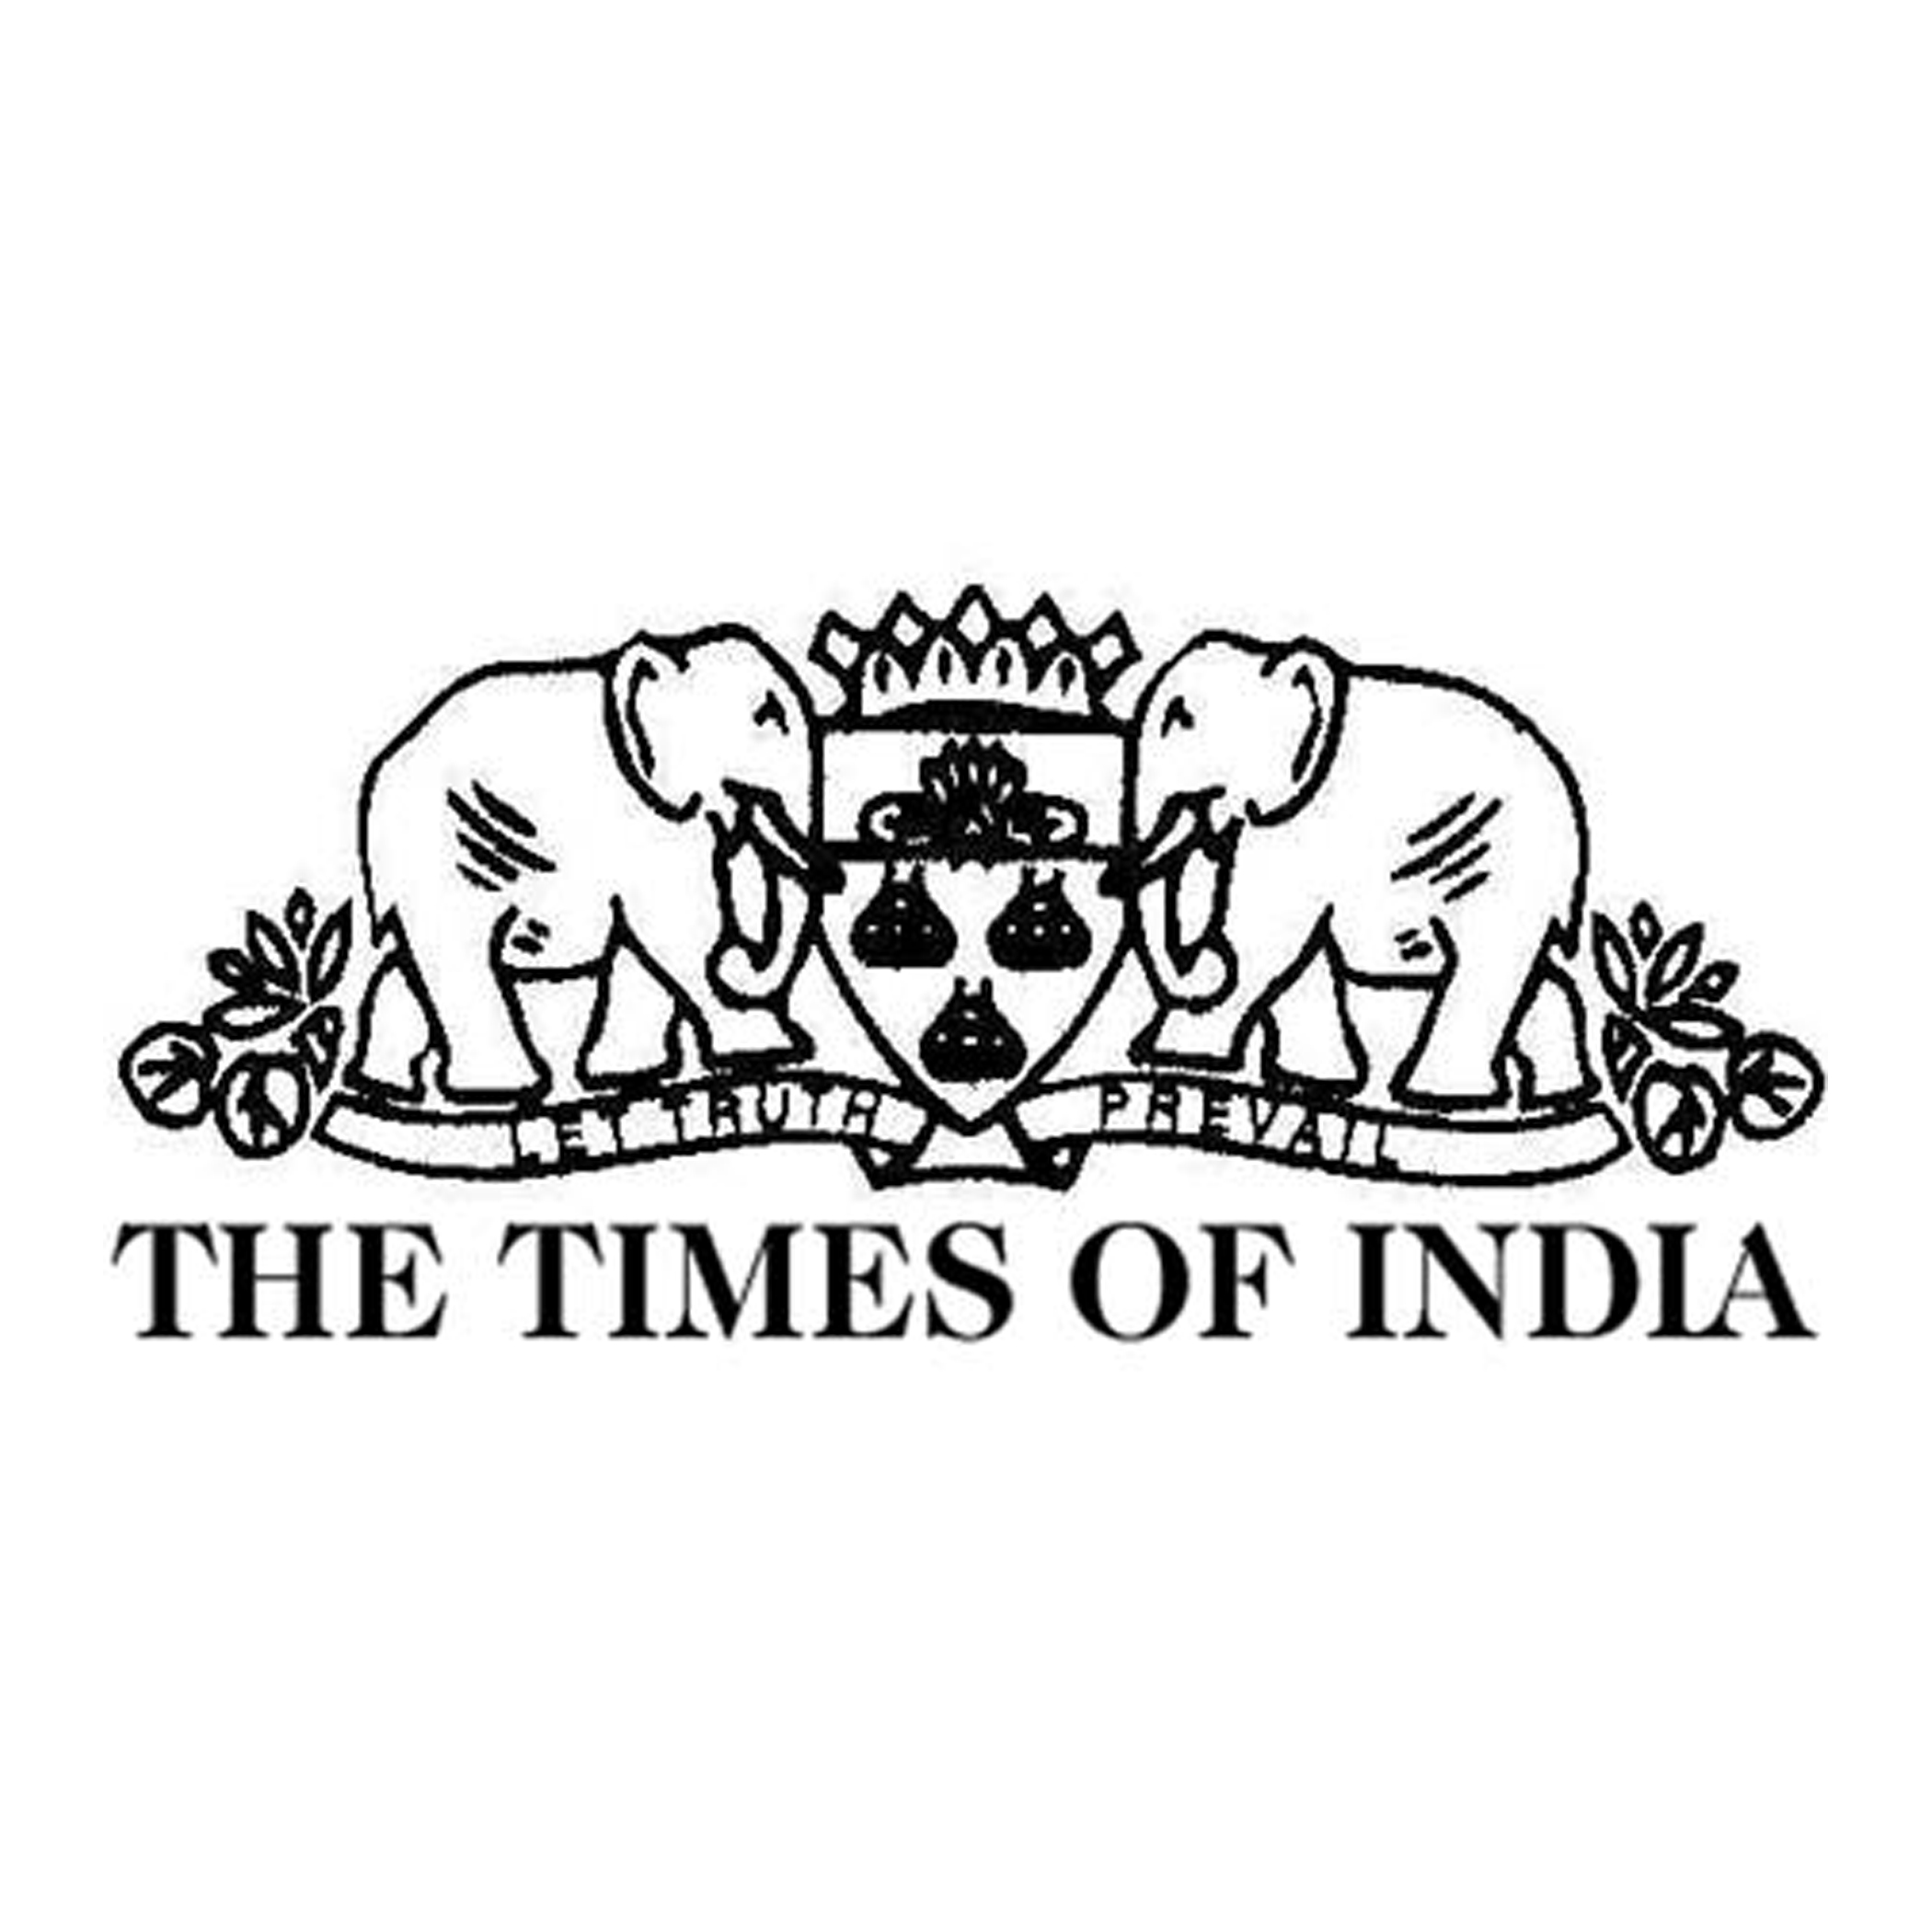 times-of-india-logo.jpg